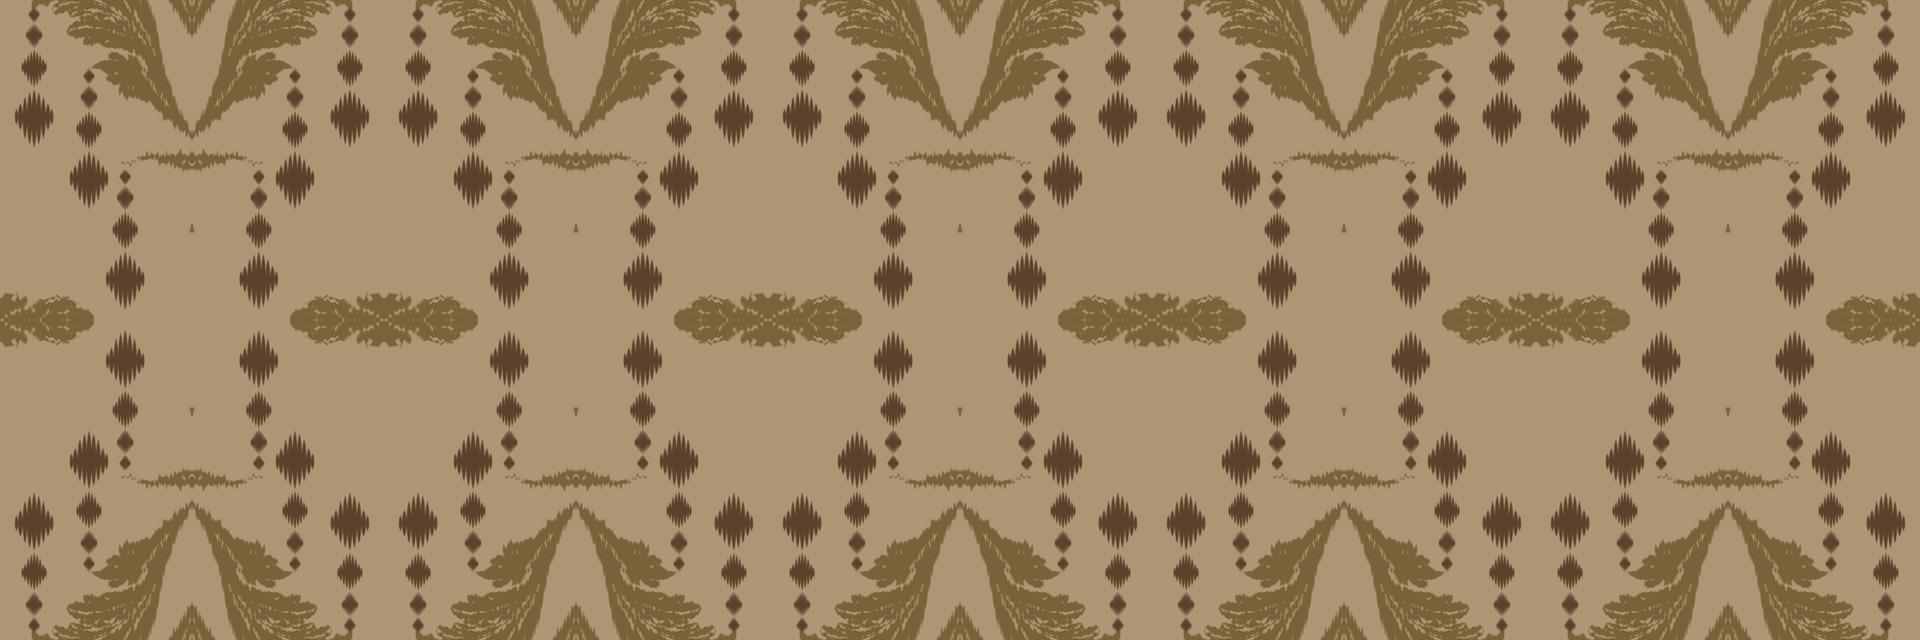 ikkat oder ikat floral batik textil nahtloses muster digitales vektordesign für druck saree kurti borneo stoff rand pinsel symbole muster baumwolle vektor